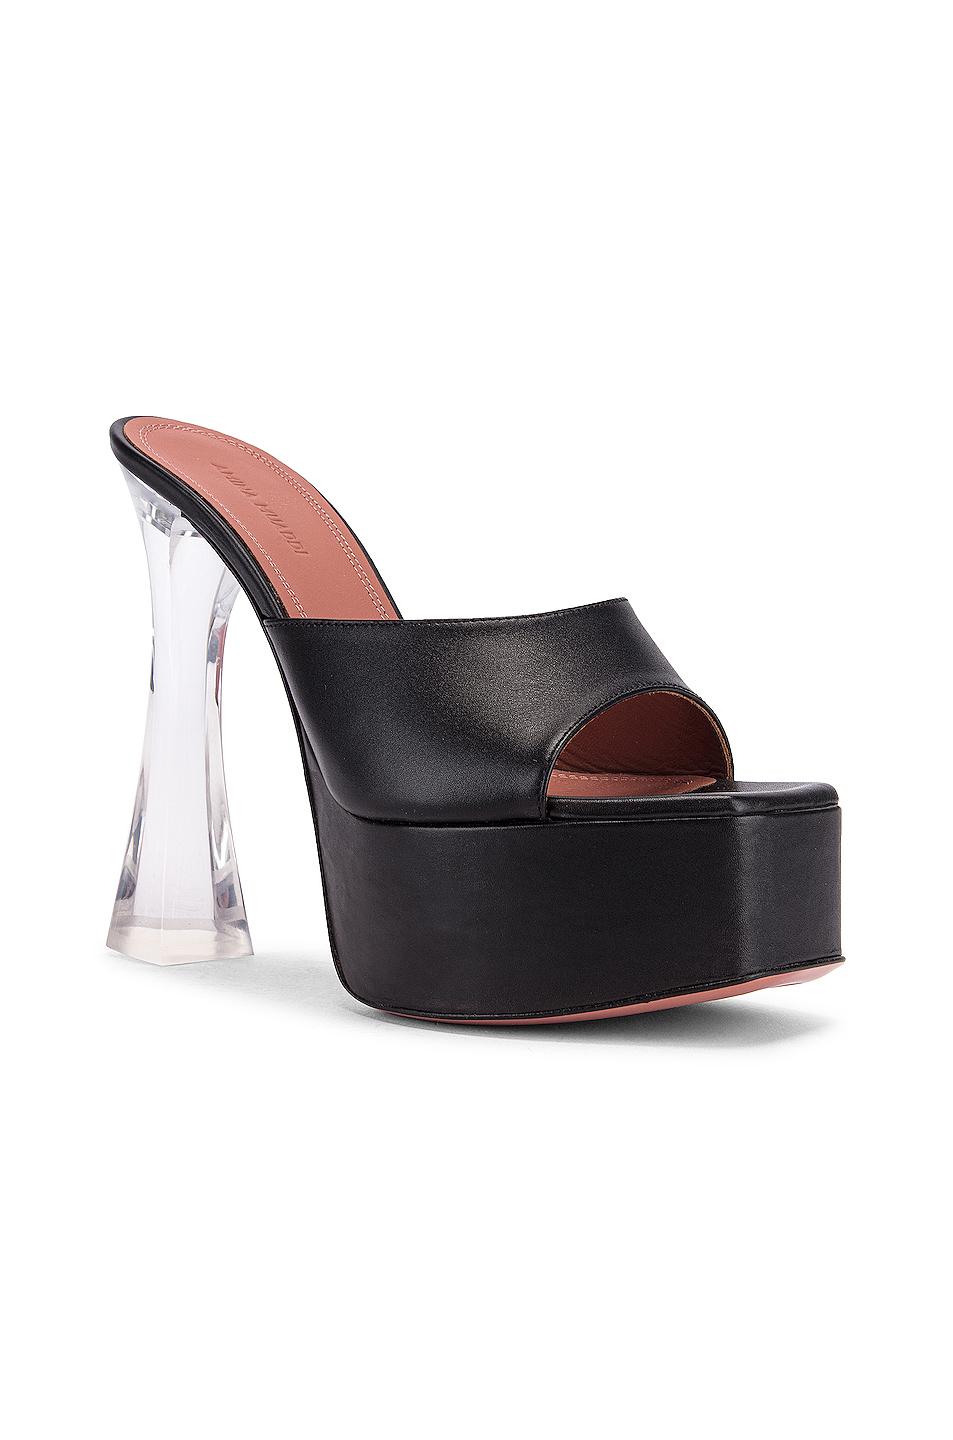 AMINA MUADDI Leather Dalida Glass Sandals in Black - Save 10% - Lyst